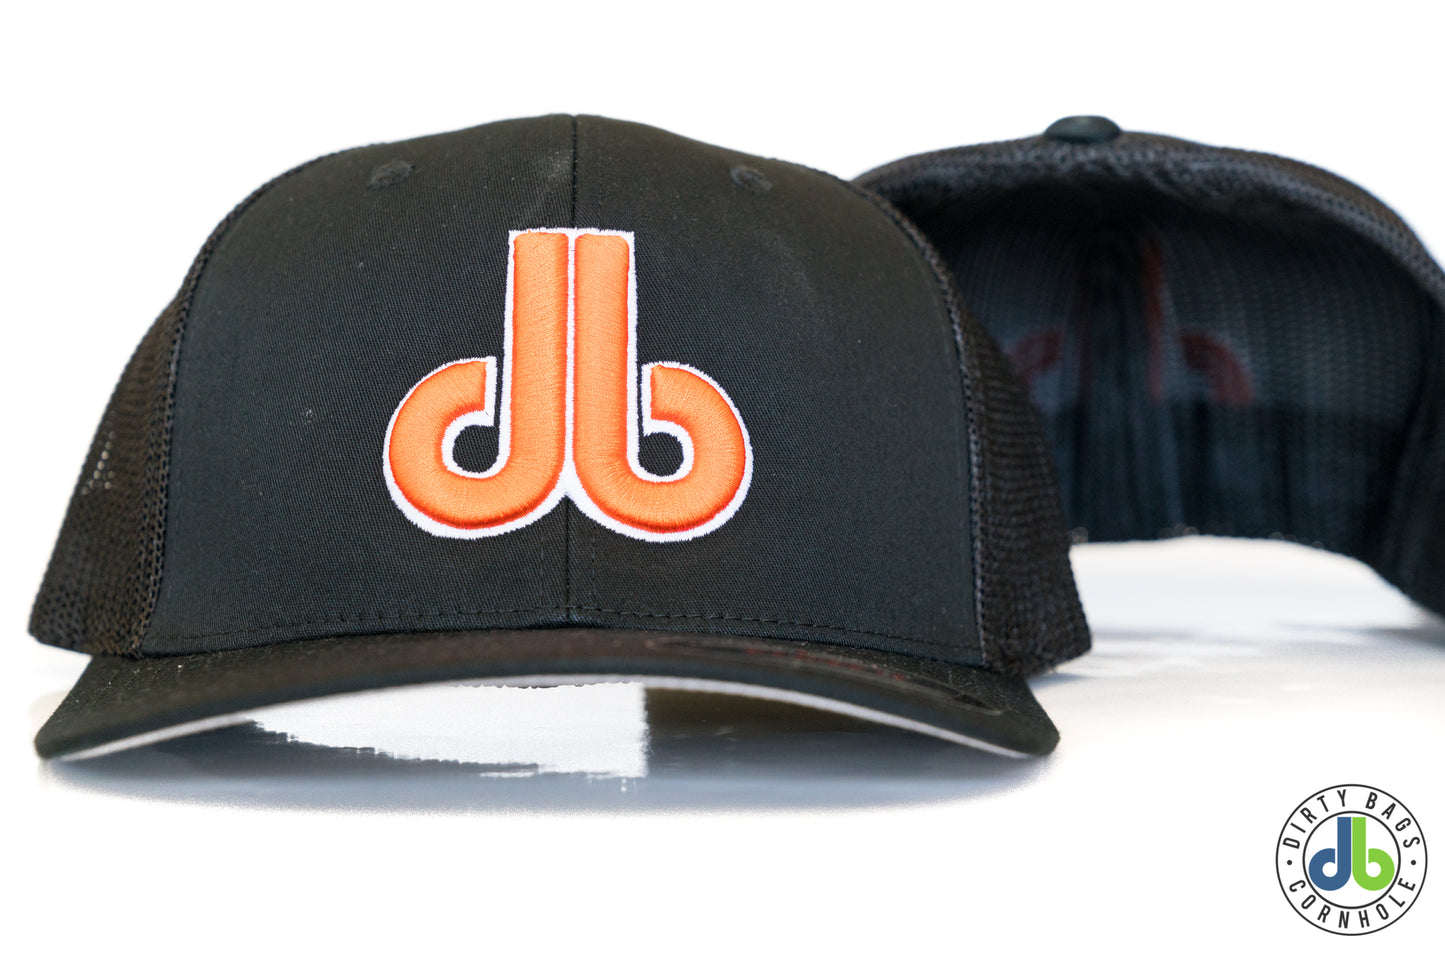 db hat - Black and Orange